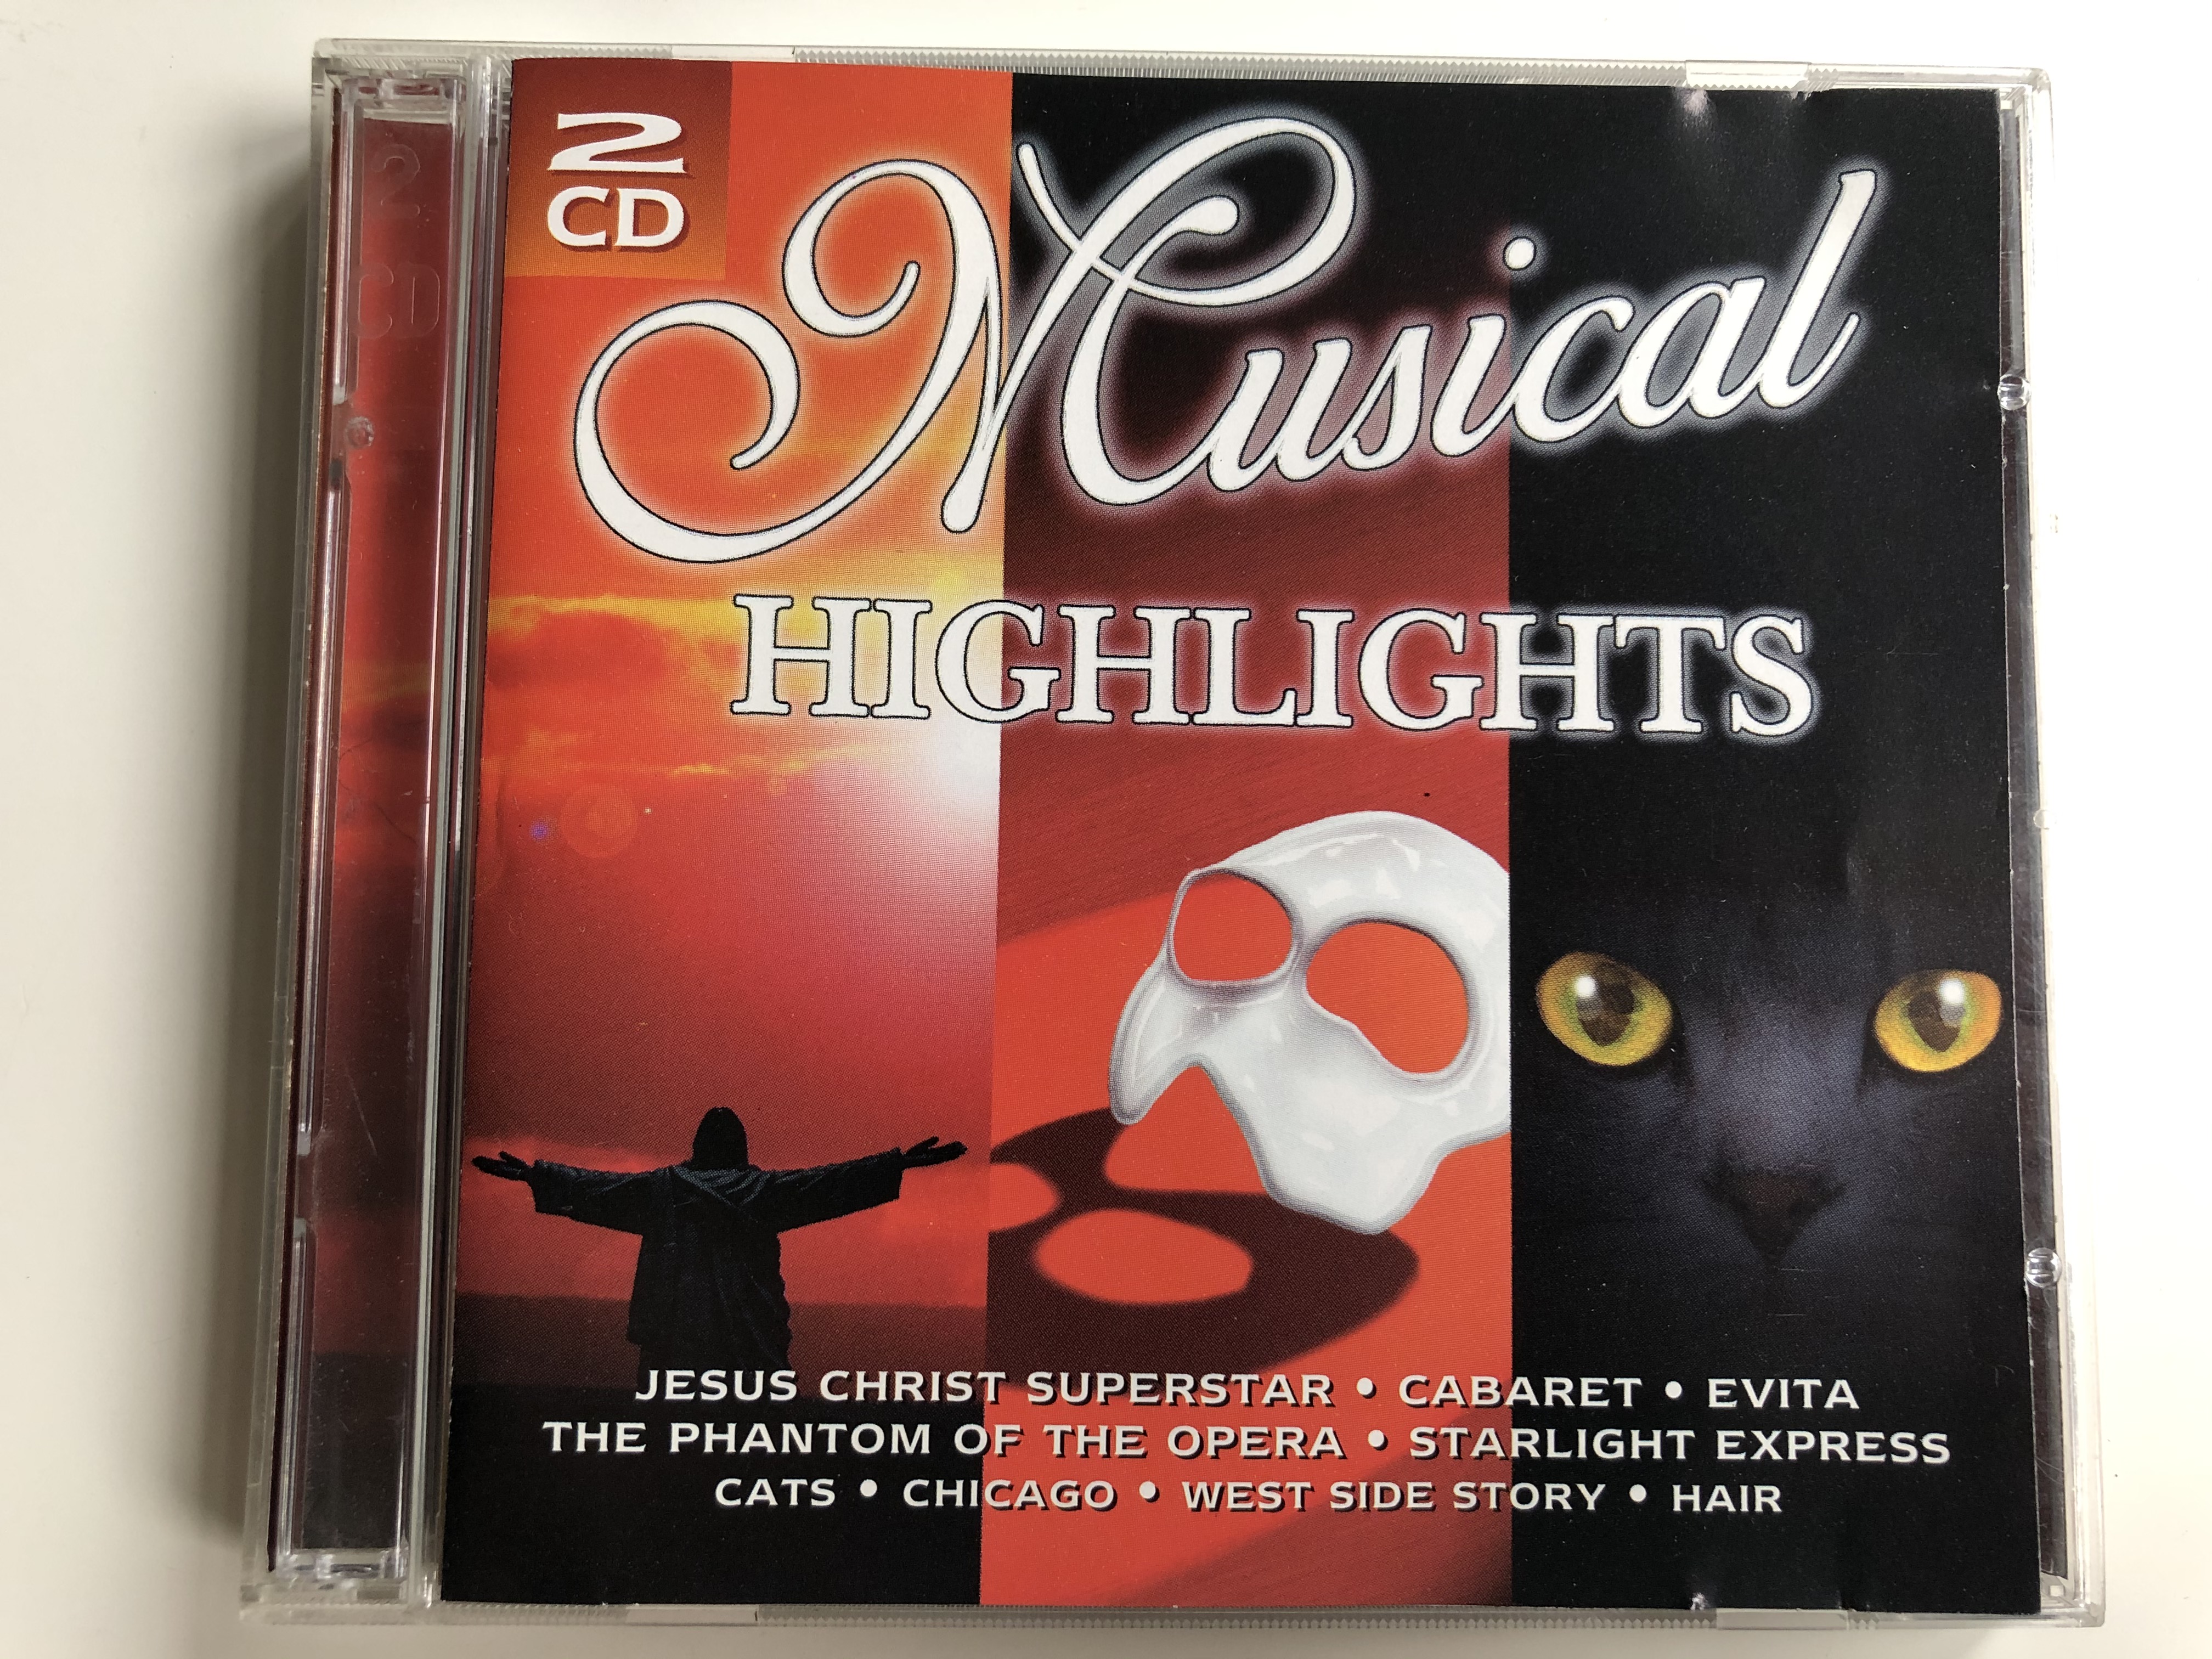 musical-highlights-jesus-christ-superstar-cabaret-evita-the-phantom-of-the-opera-starlight-express-cats-chicago-west-side-story-hair-super-doubles-2x-audio-cd-1998-sd-854062-1-.jpg